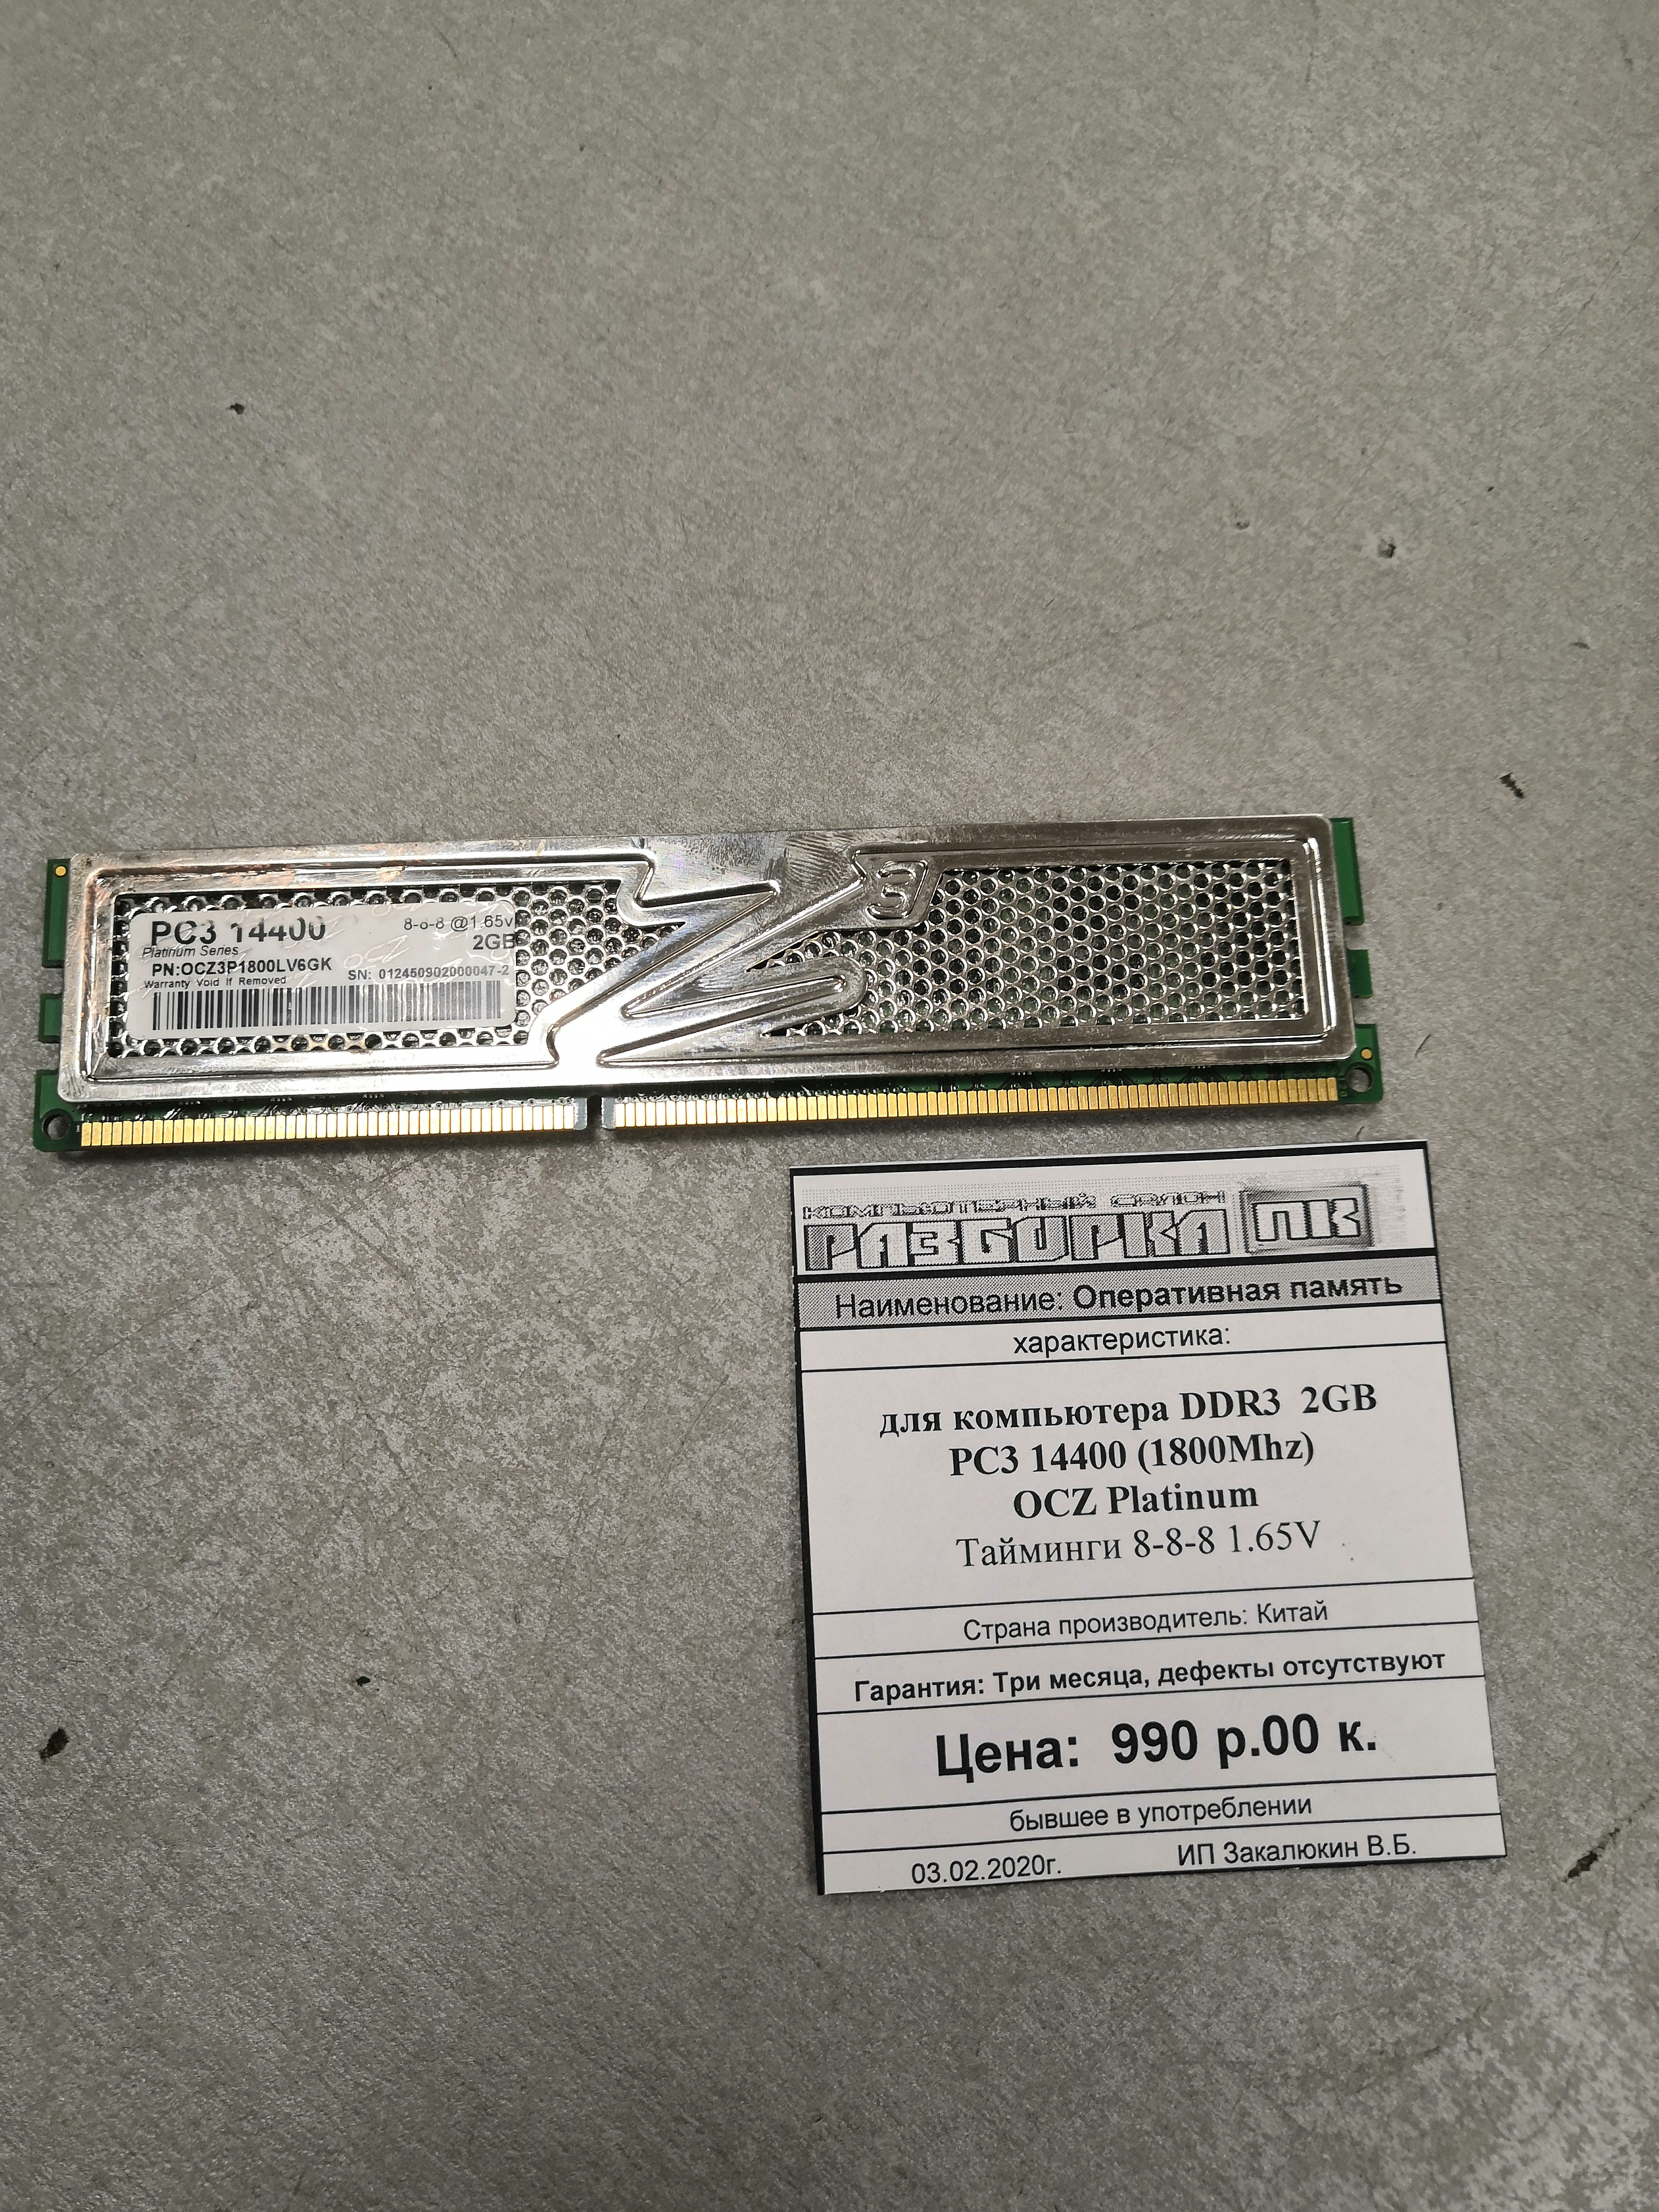 Оперативная память DIMM DDR3 2GB PC3 14400 (1800Mhz) OCZ Platinum